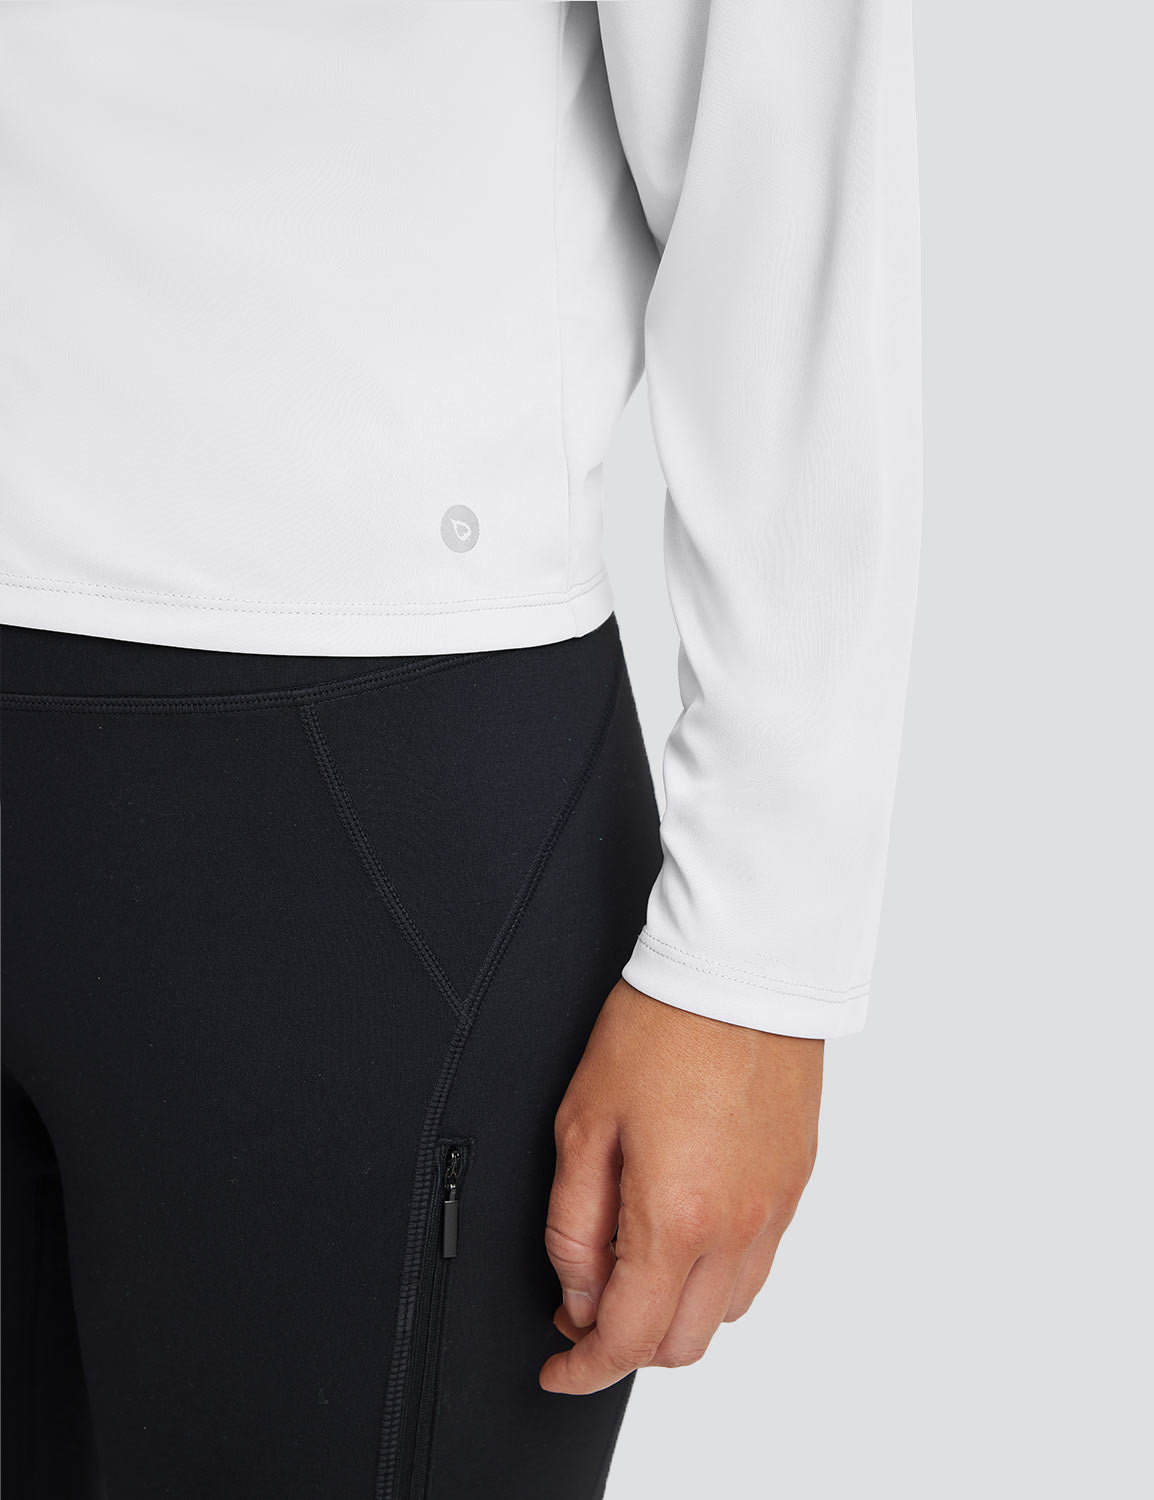 Baleaf Women's UPF 50+ Short Buckled Jacket Lucent White Details